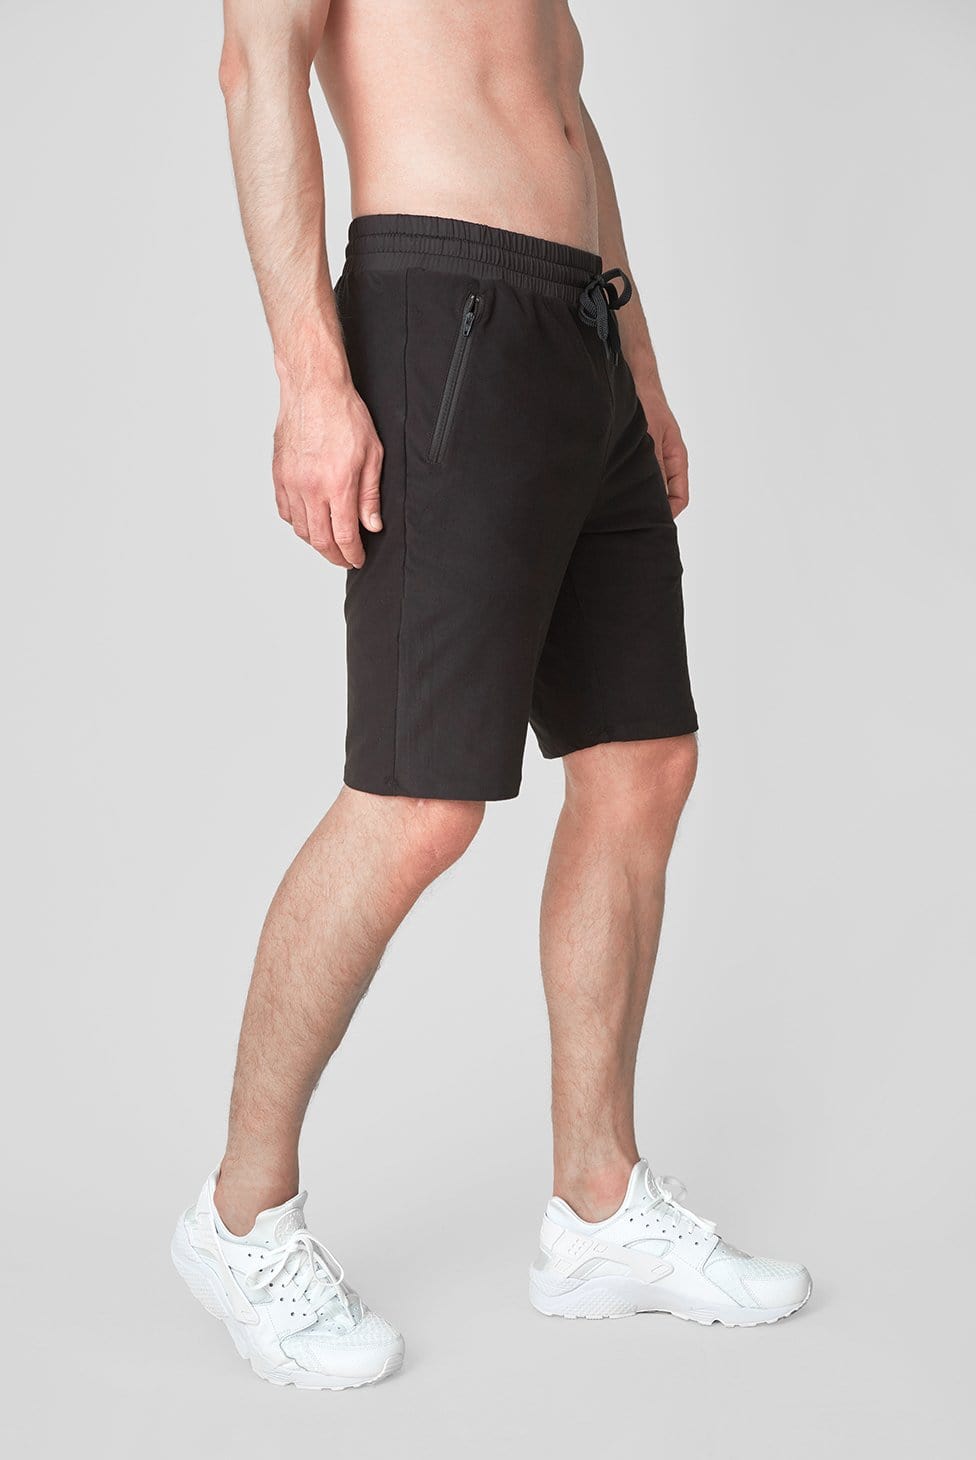 Onyx High Contrast Shorts - - Black - Primary - Keiser Clark Black / x Large